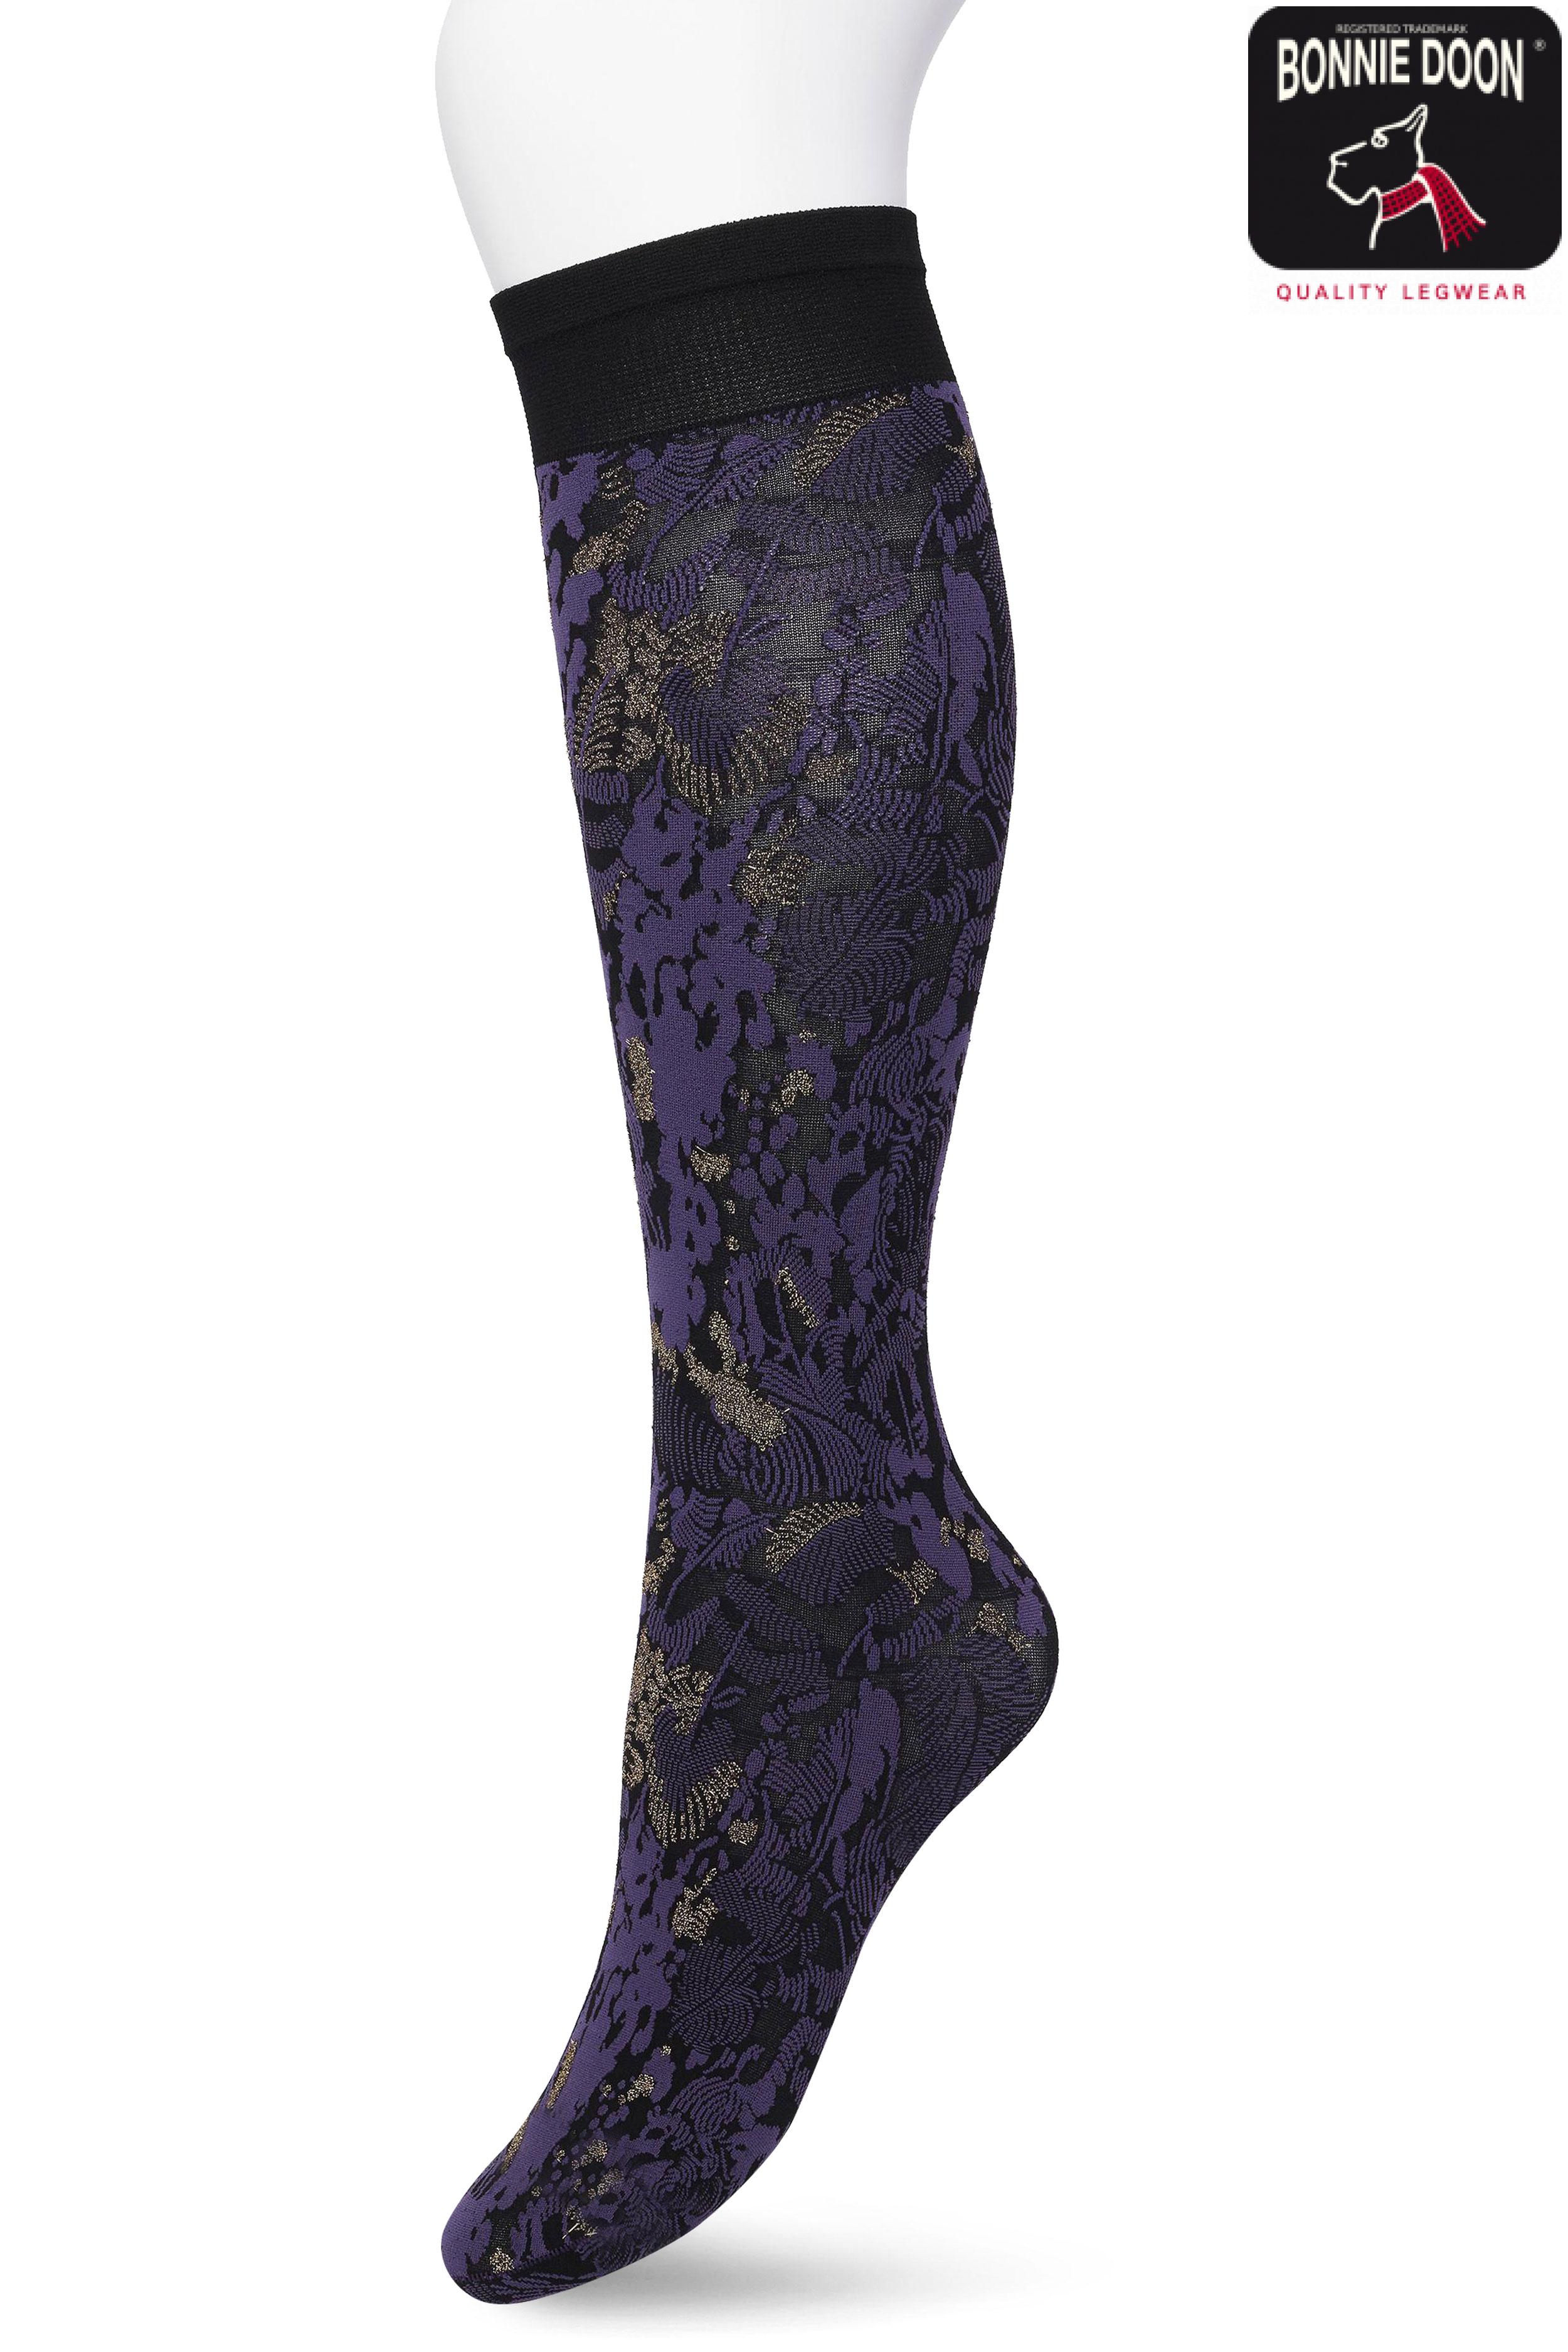 Botanical Lurex knee high Purple velvet